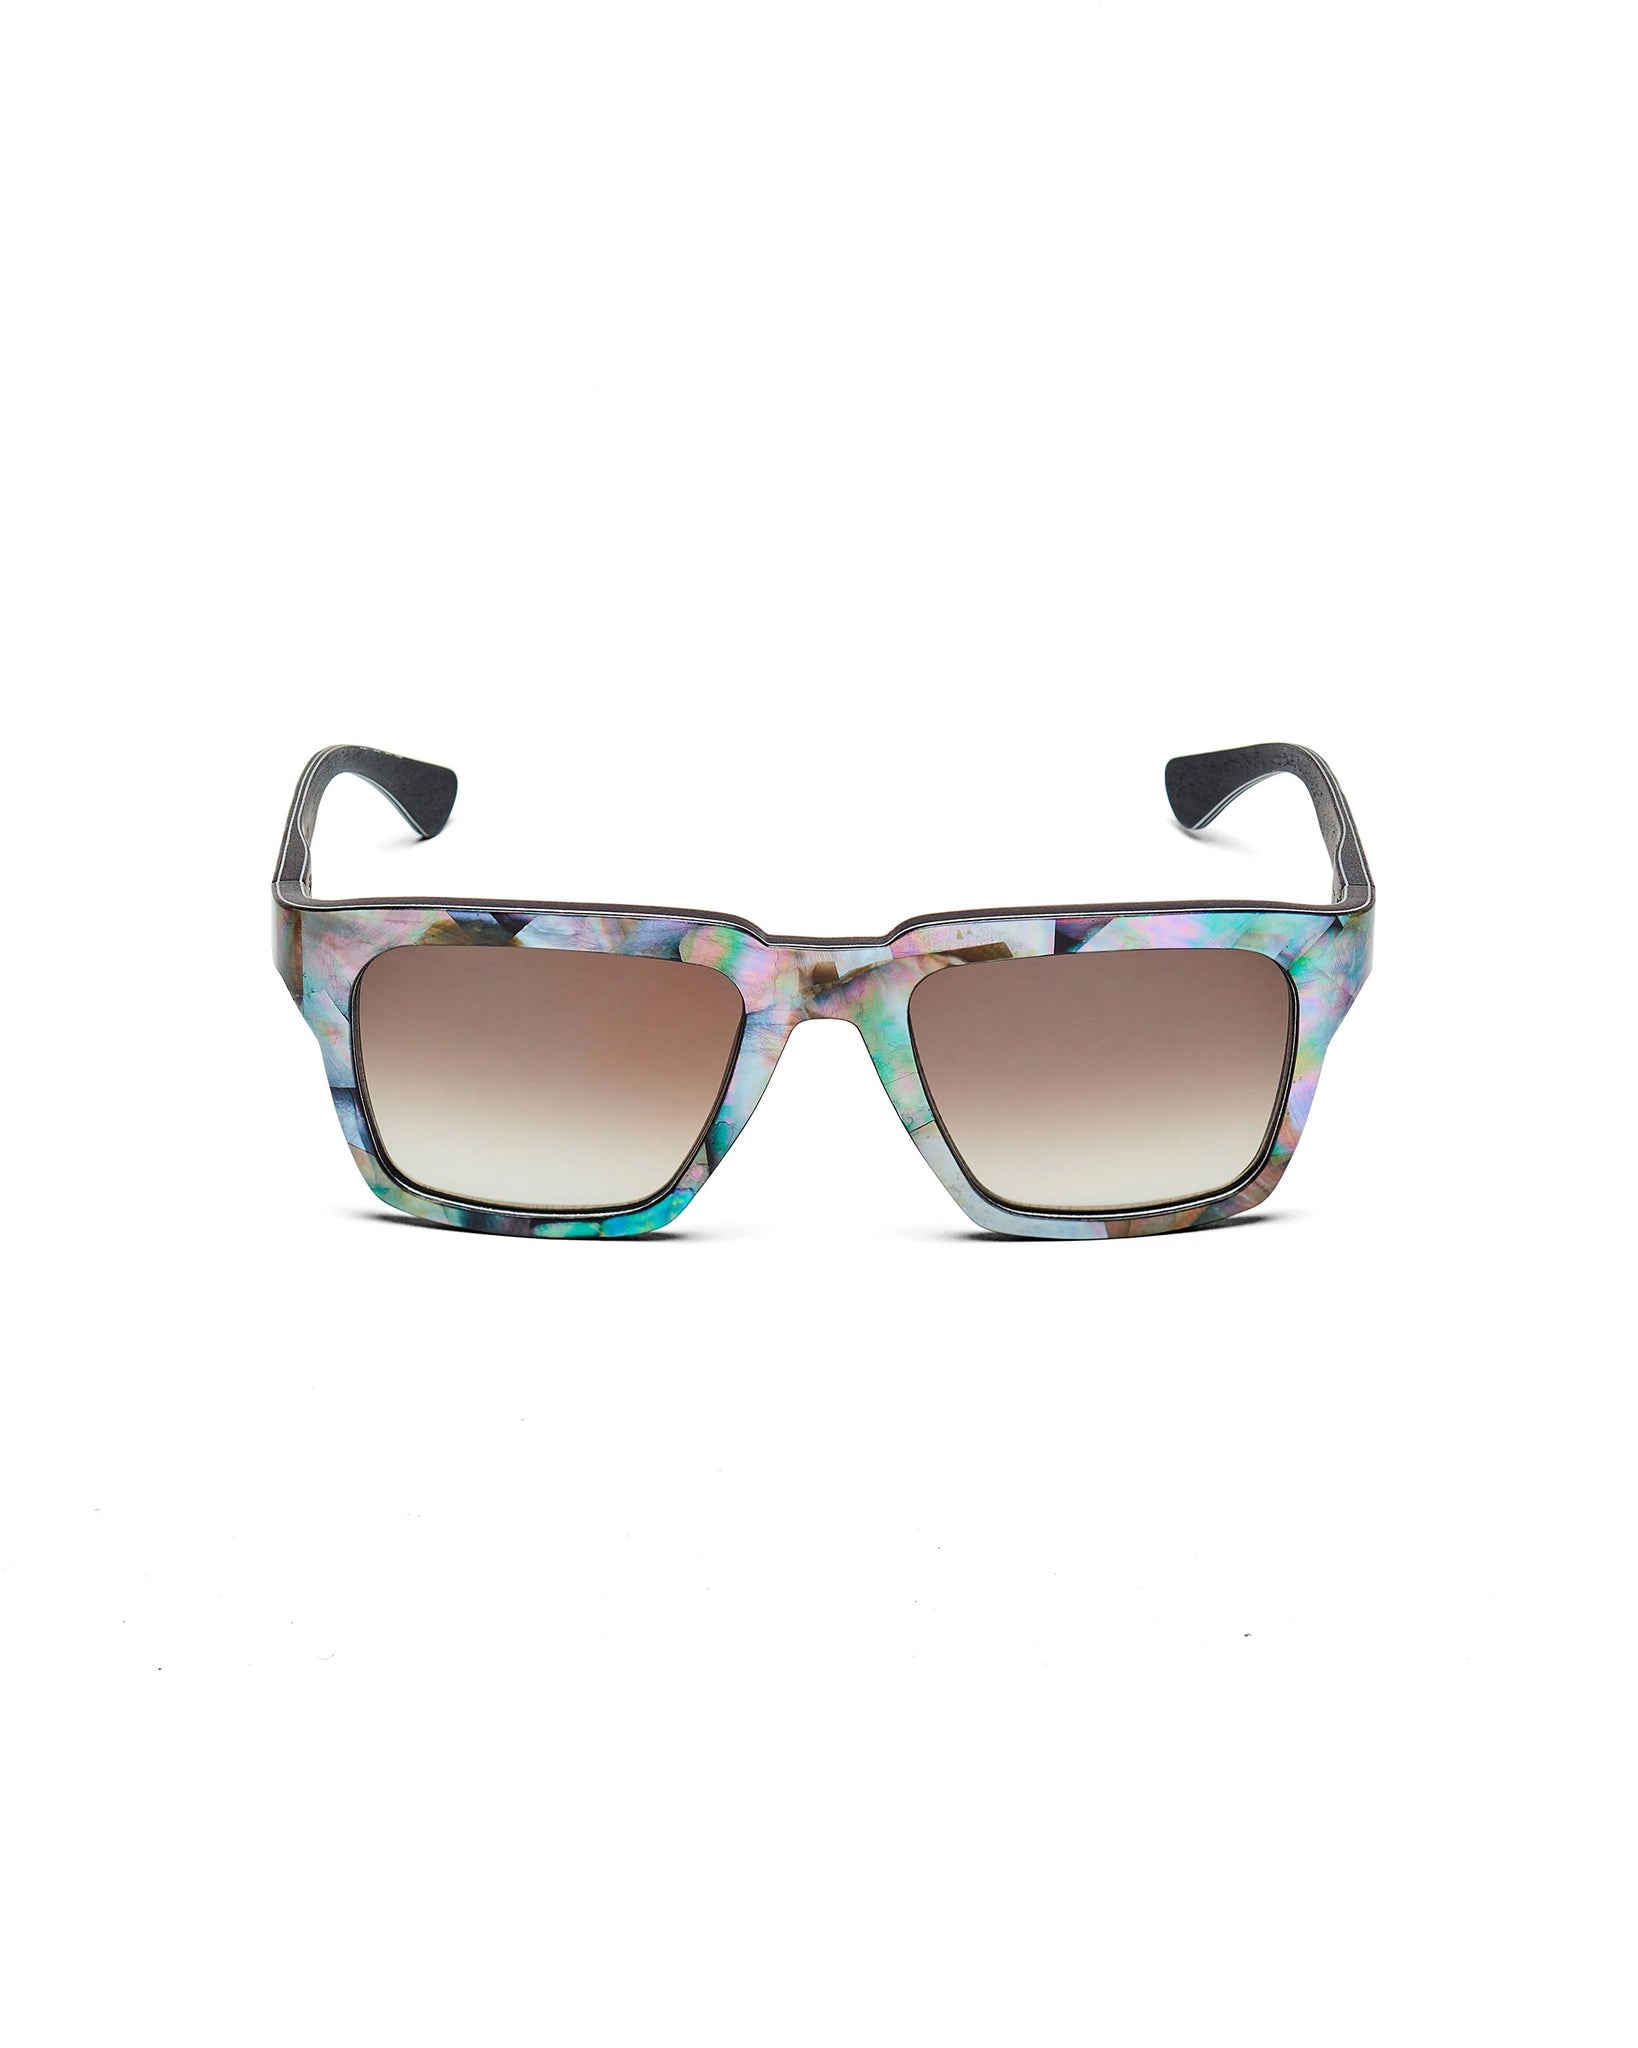 Superlativa® sunglasses model Tuamotu